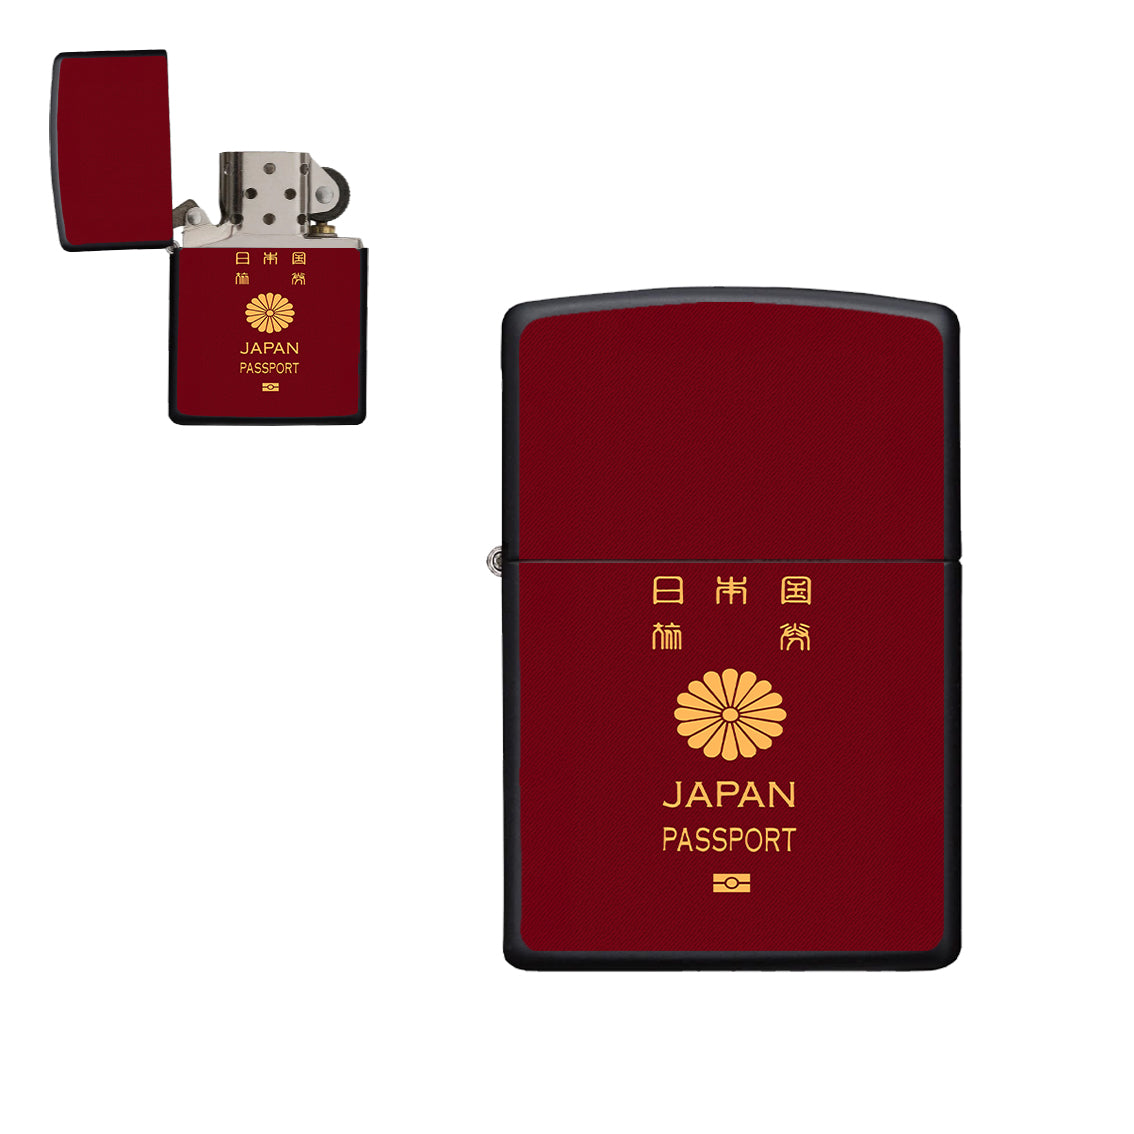 Japan Passport Designed Metal Lighters